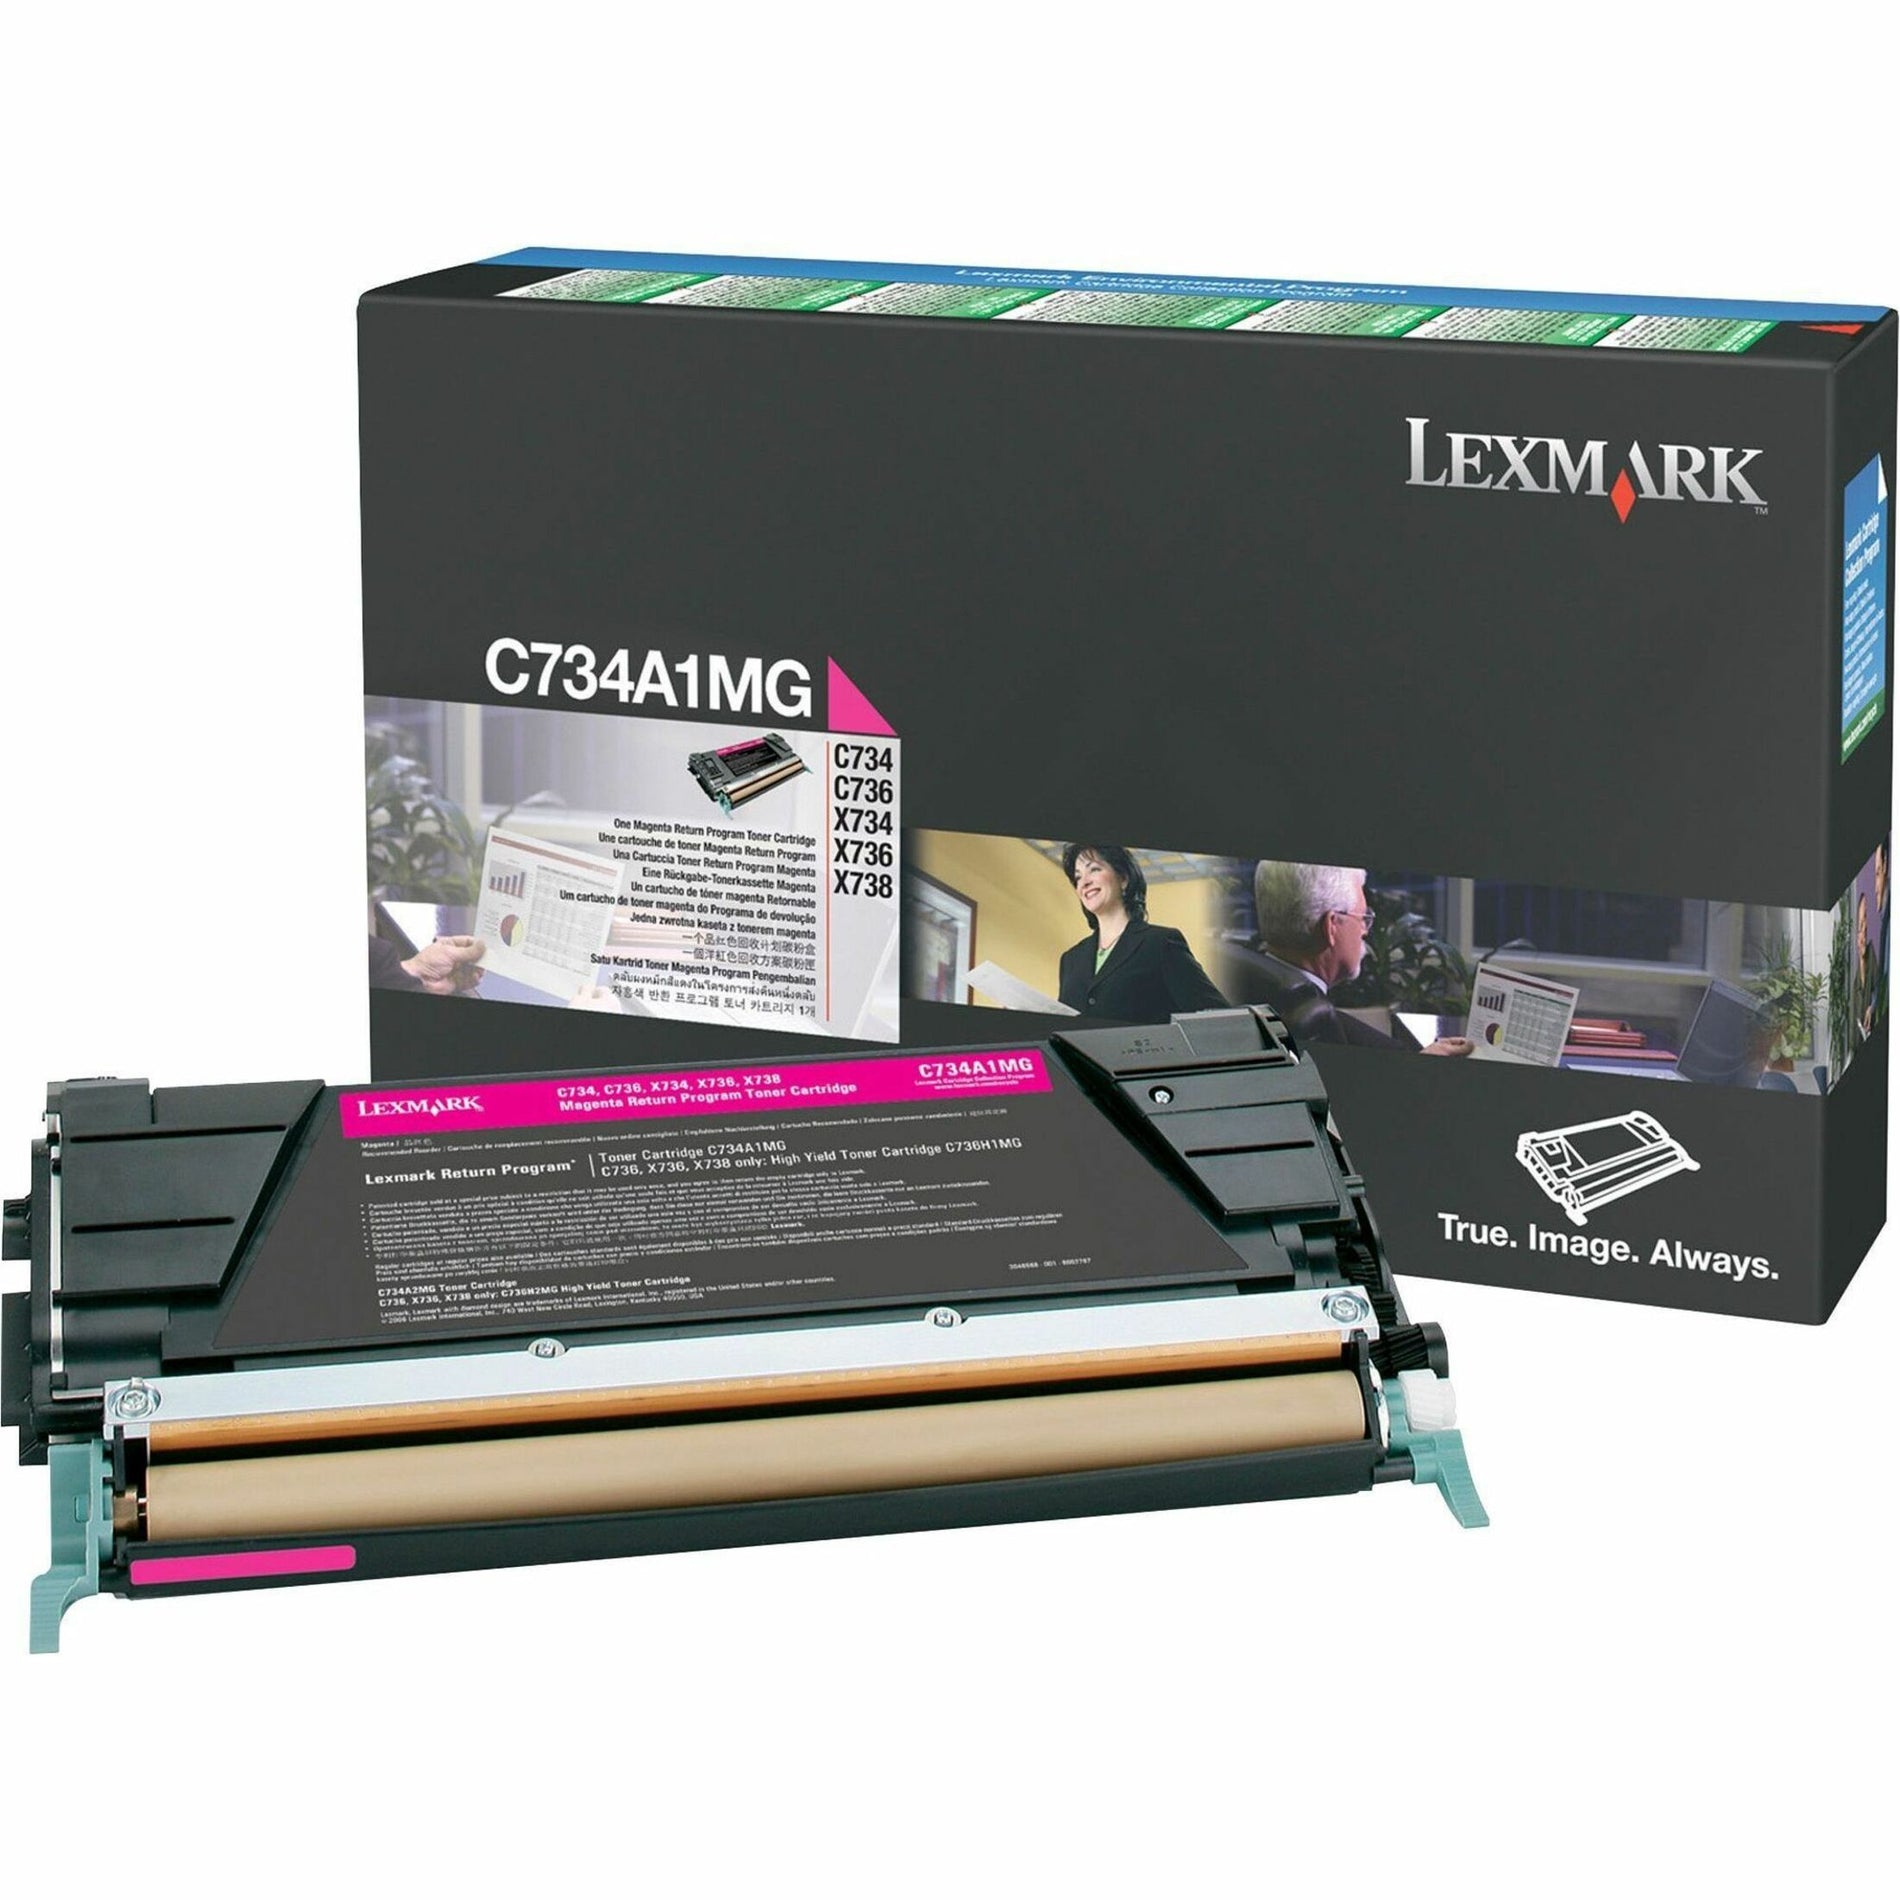 Lexmark C734A1MG Toner Cartridge, Magenta, 6000 Page Yield